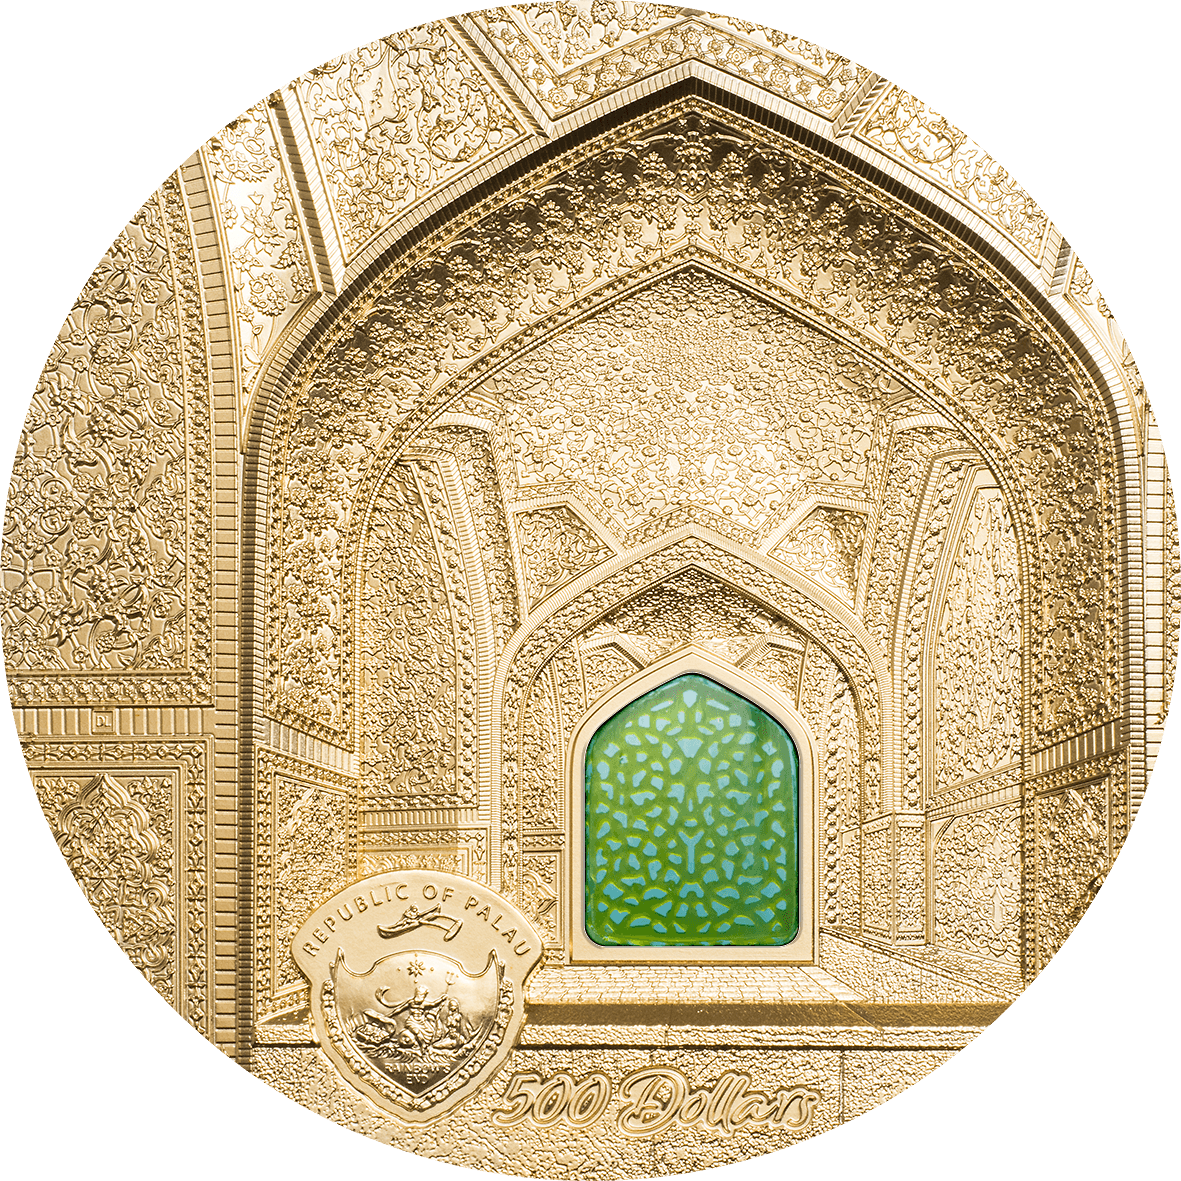 TIFFANY ART Isfahan 5 Oz Gold Coin $500 Palau 2020 - PARTHAVA COIN